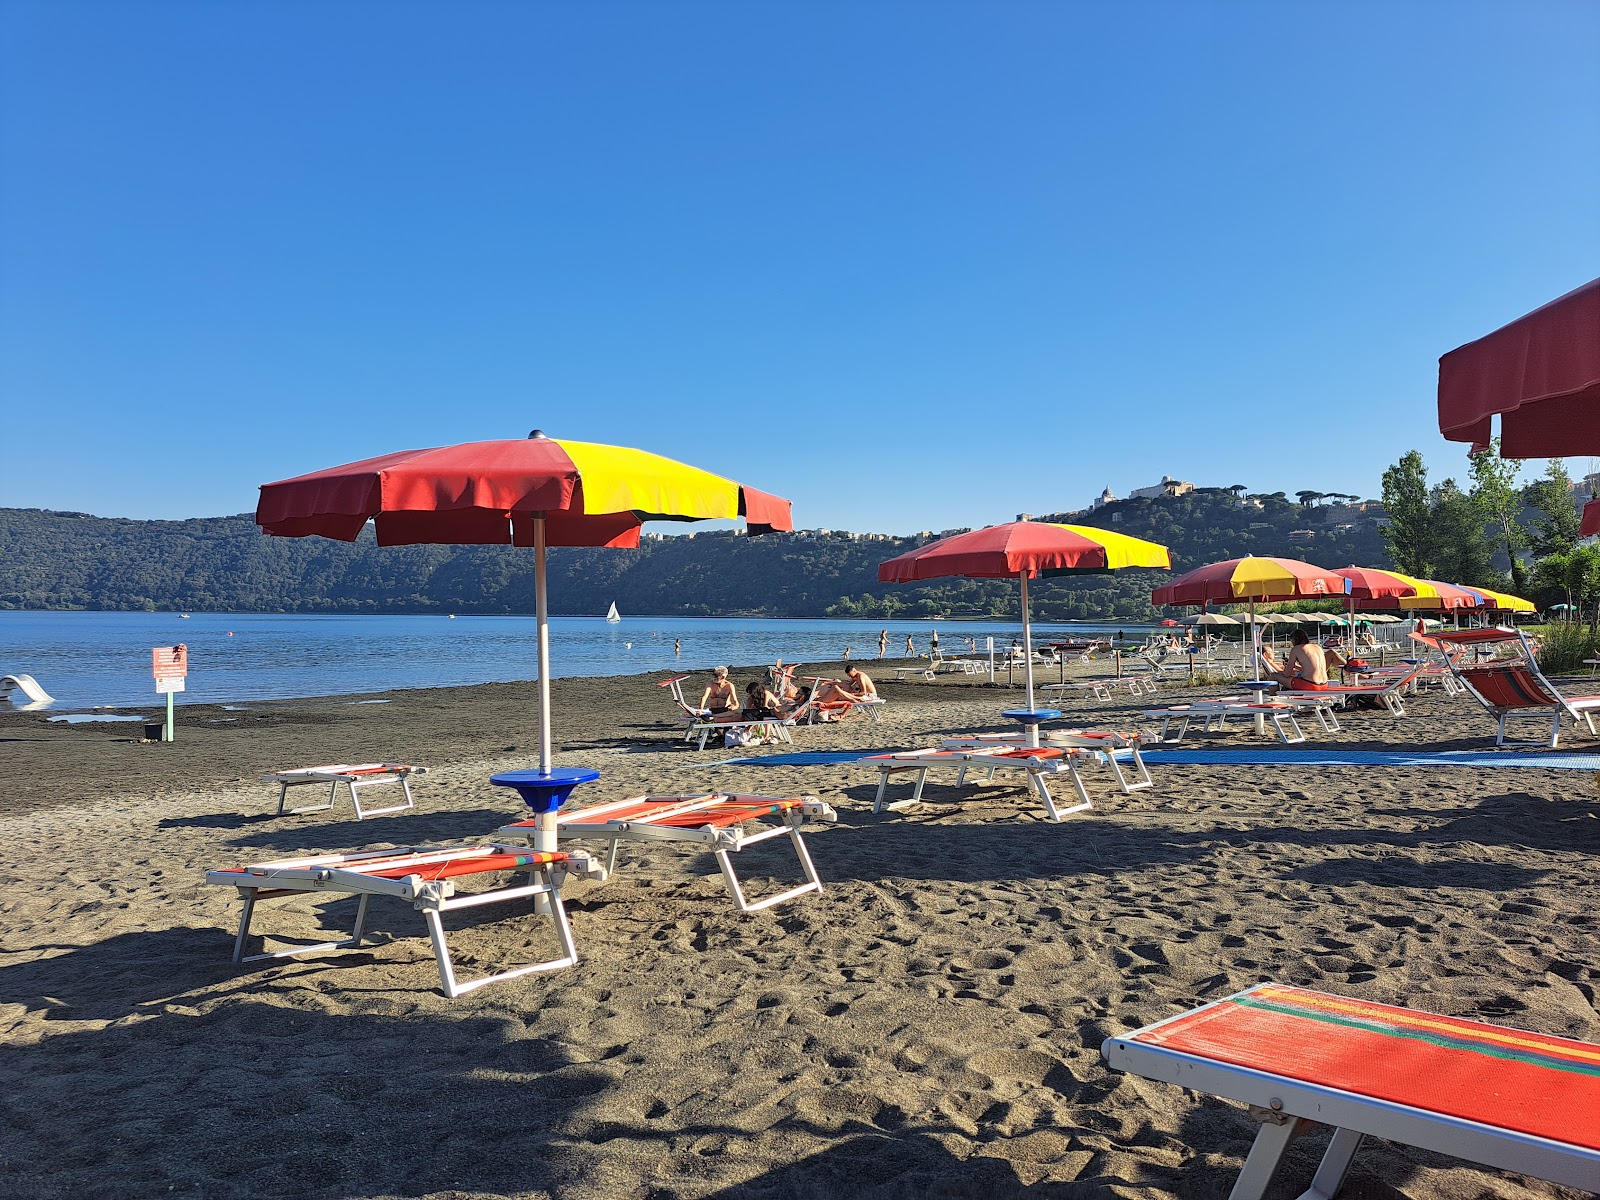 Foto de Spiaggia di lago Albano - lugar popular entre os apreciadores de relaxamento